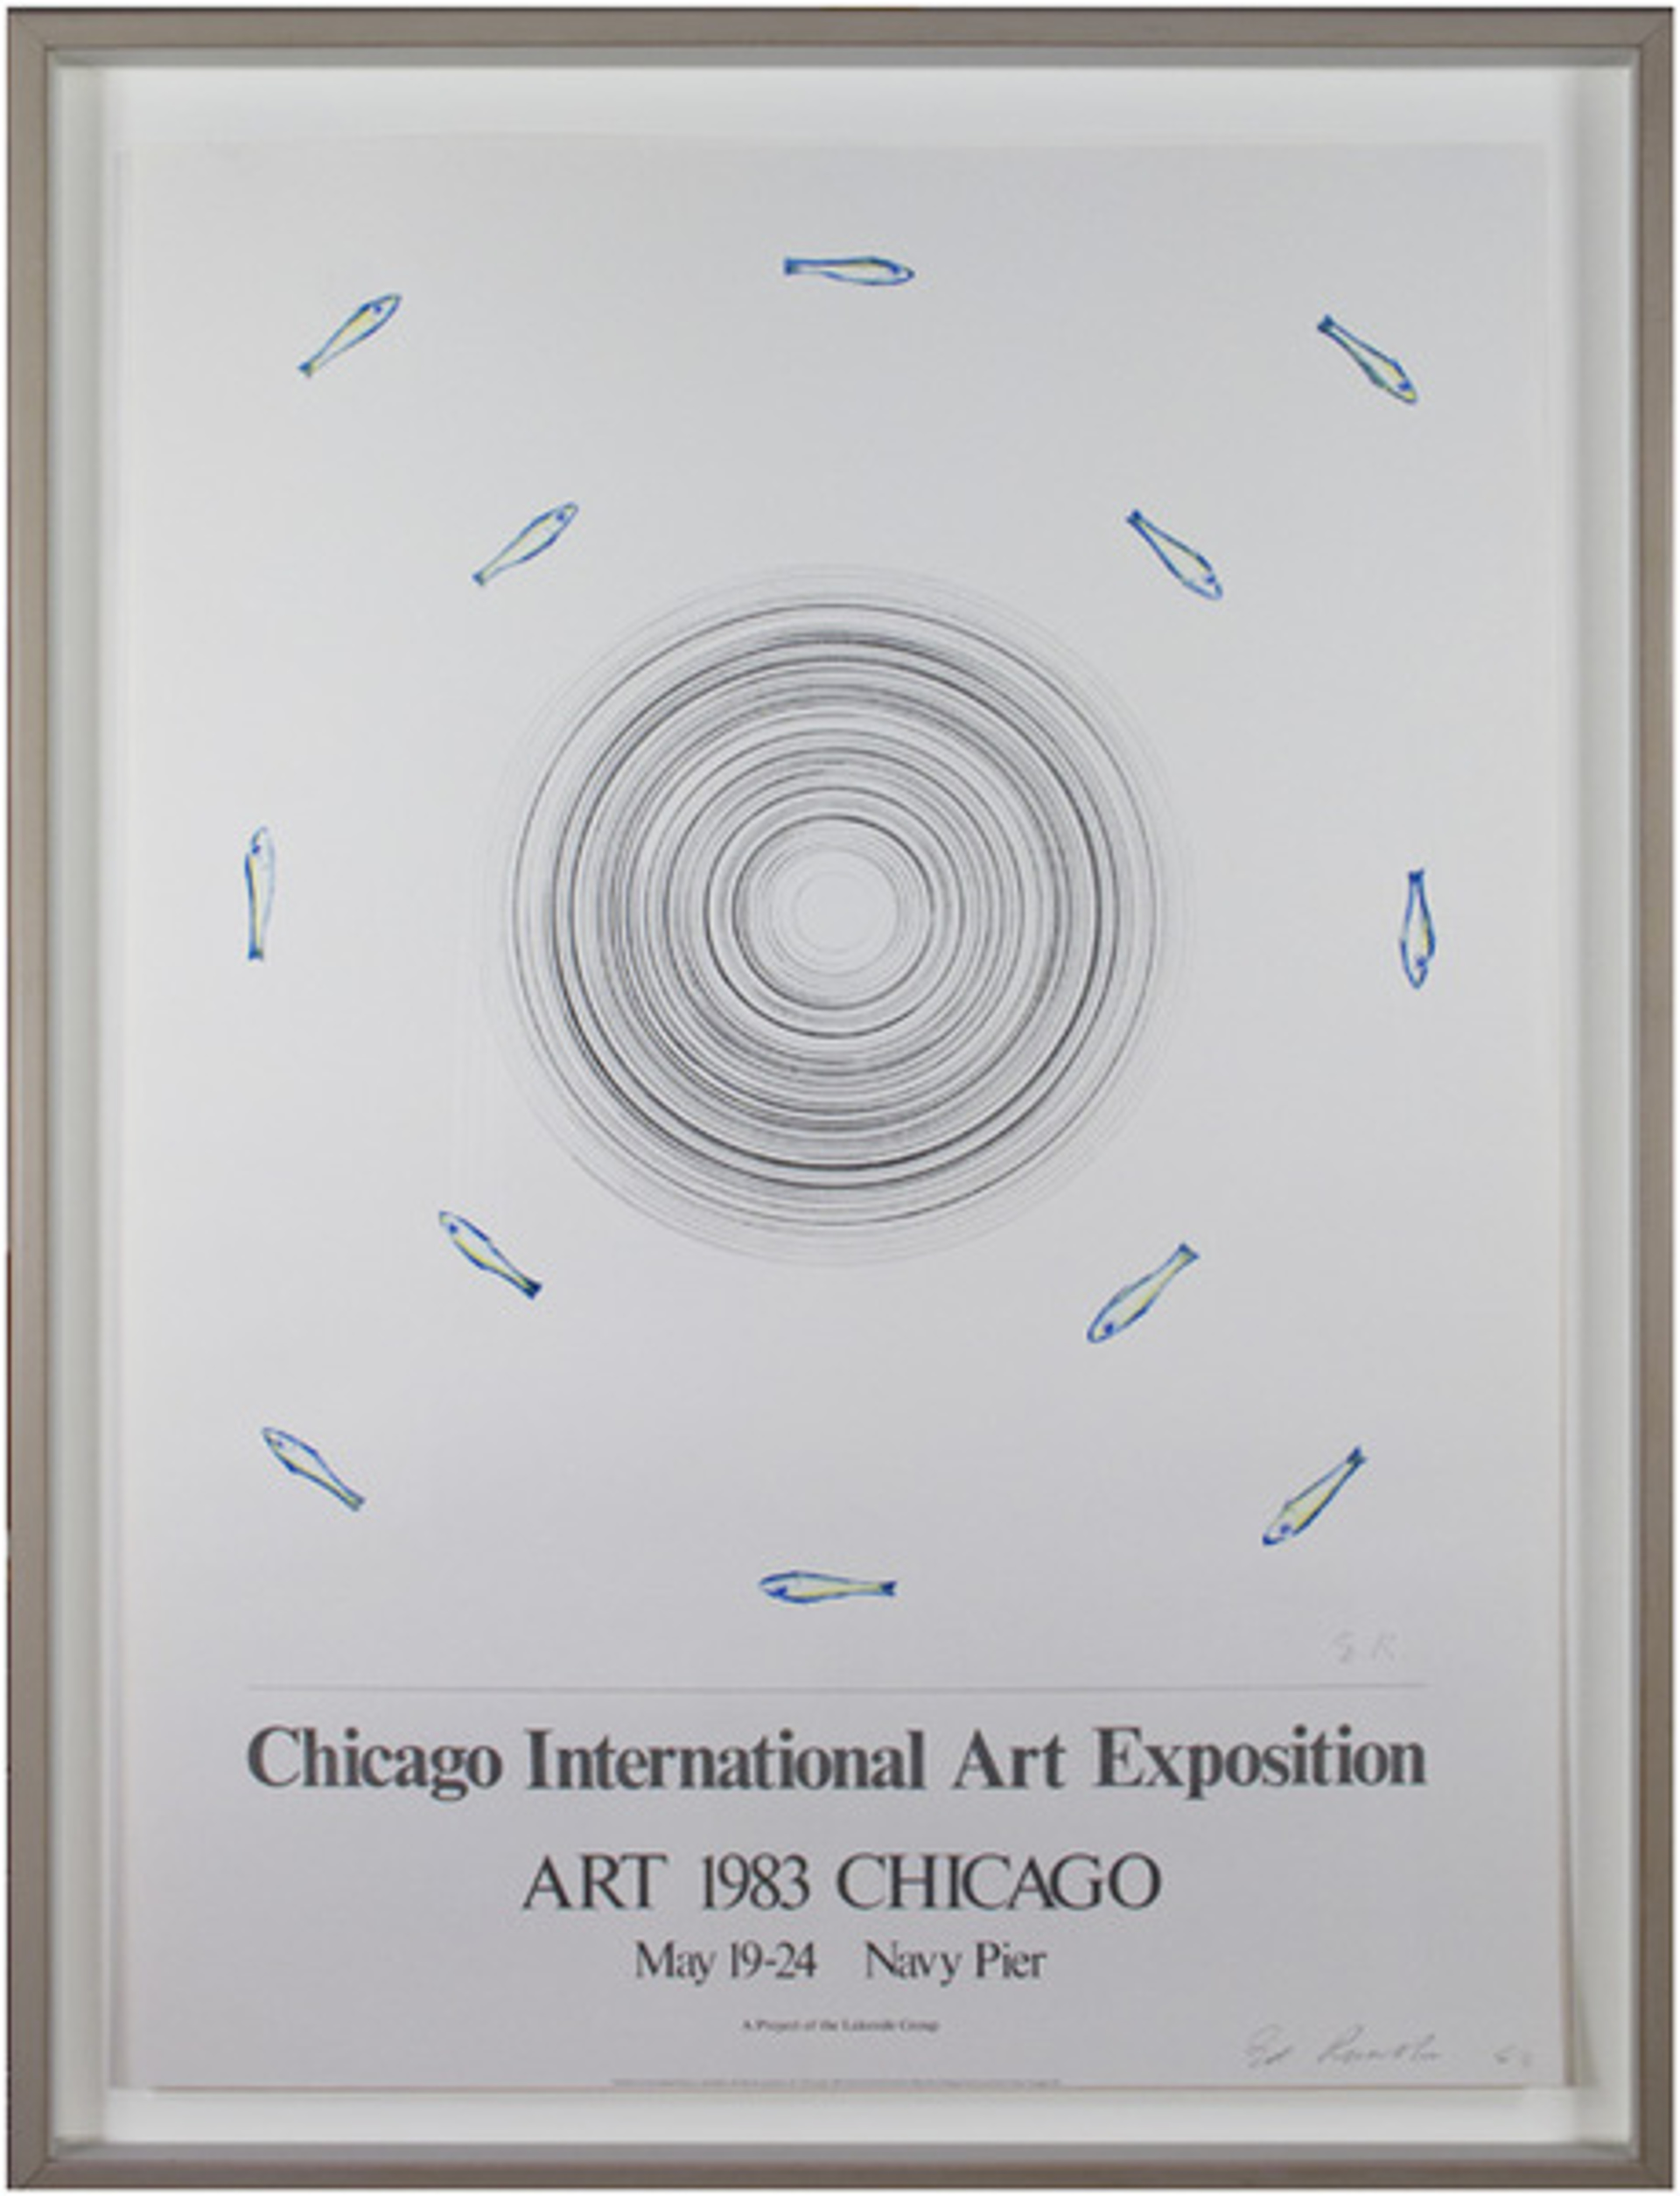 Chicago International Art Exhibition by Edward Ruscha